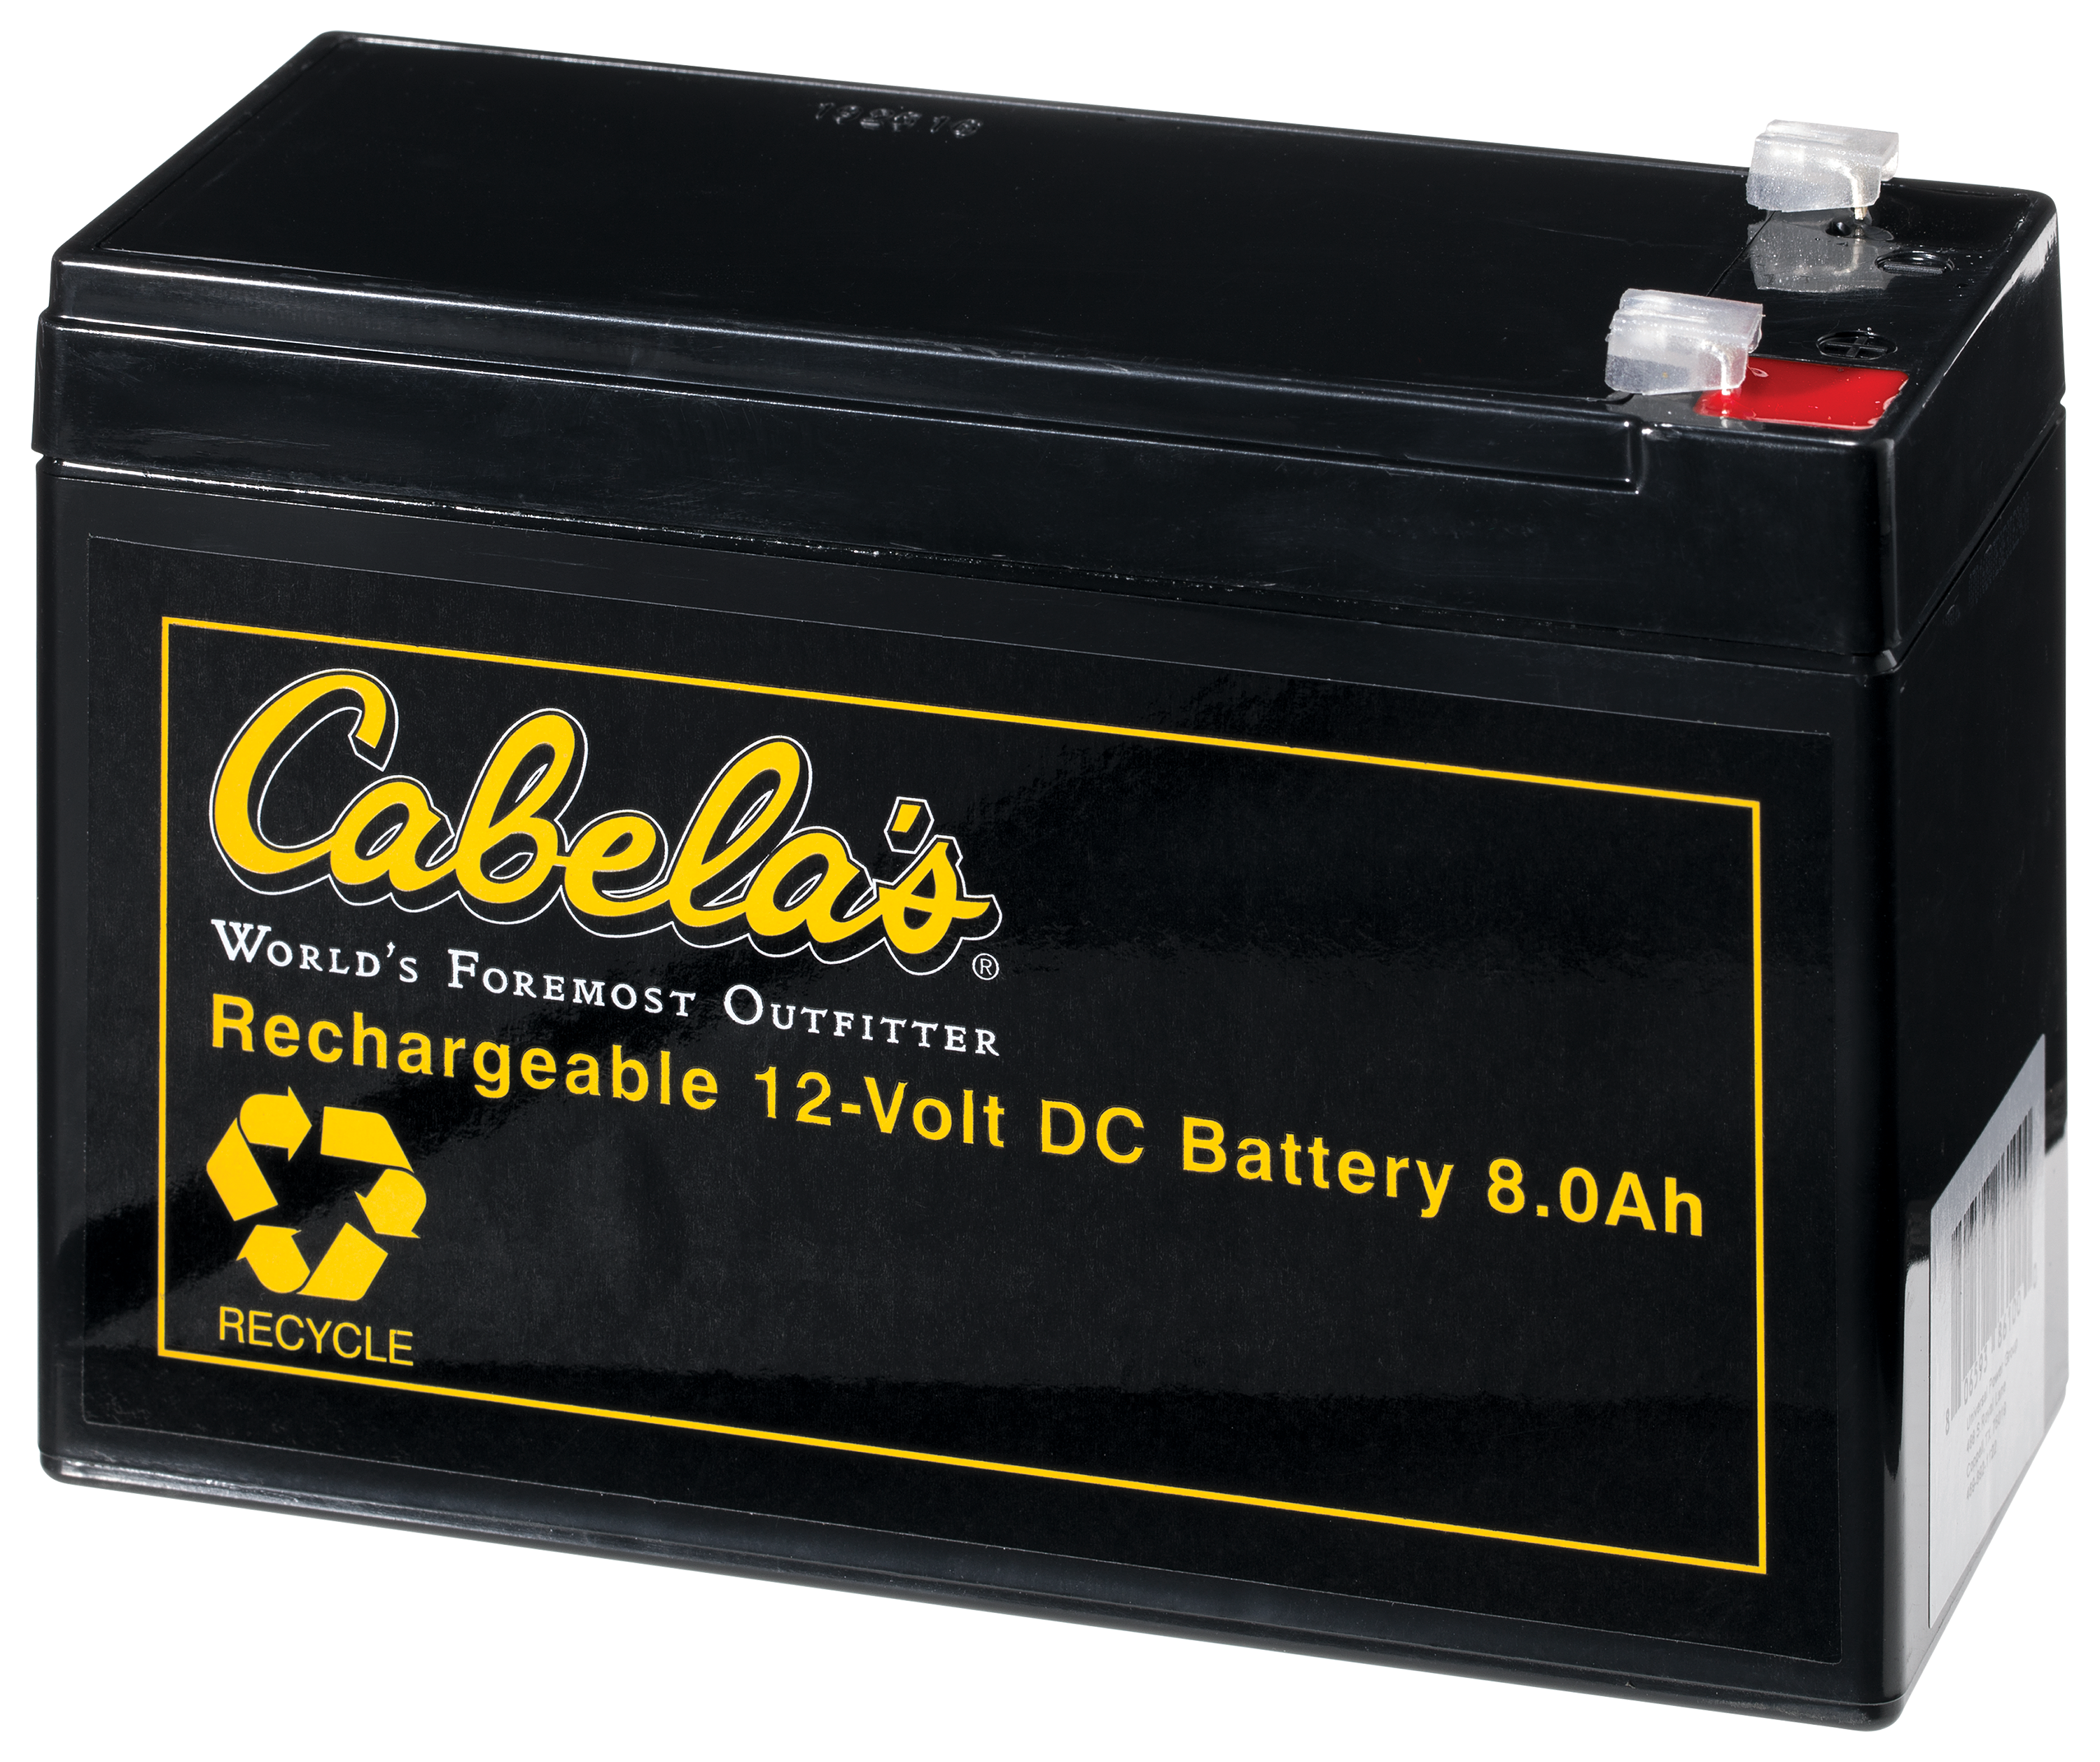 Cabela's Rechargeable 12V Battery